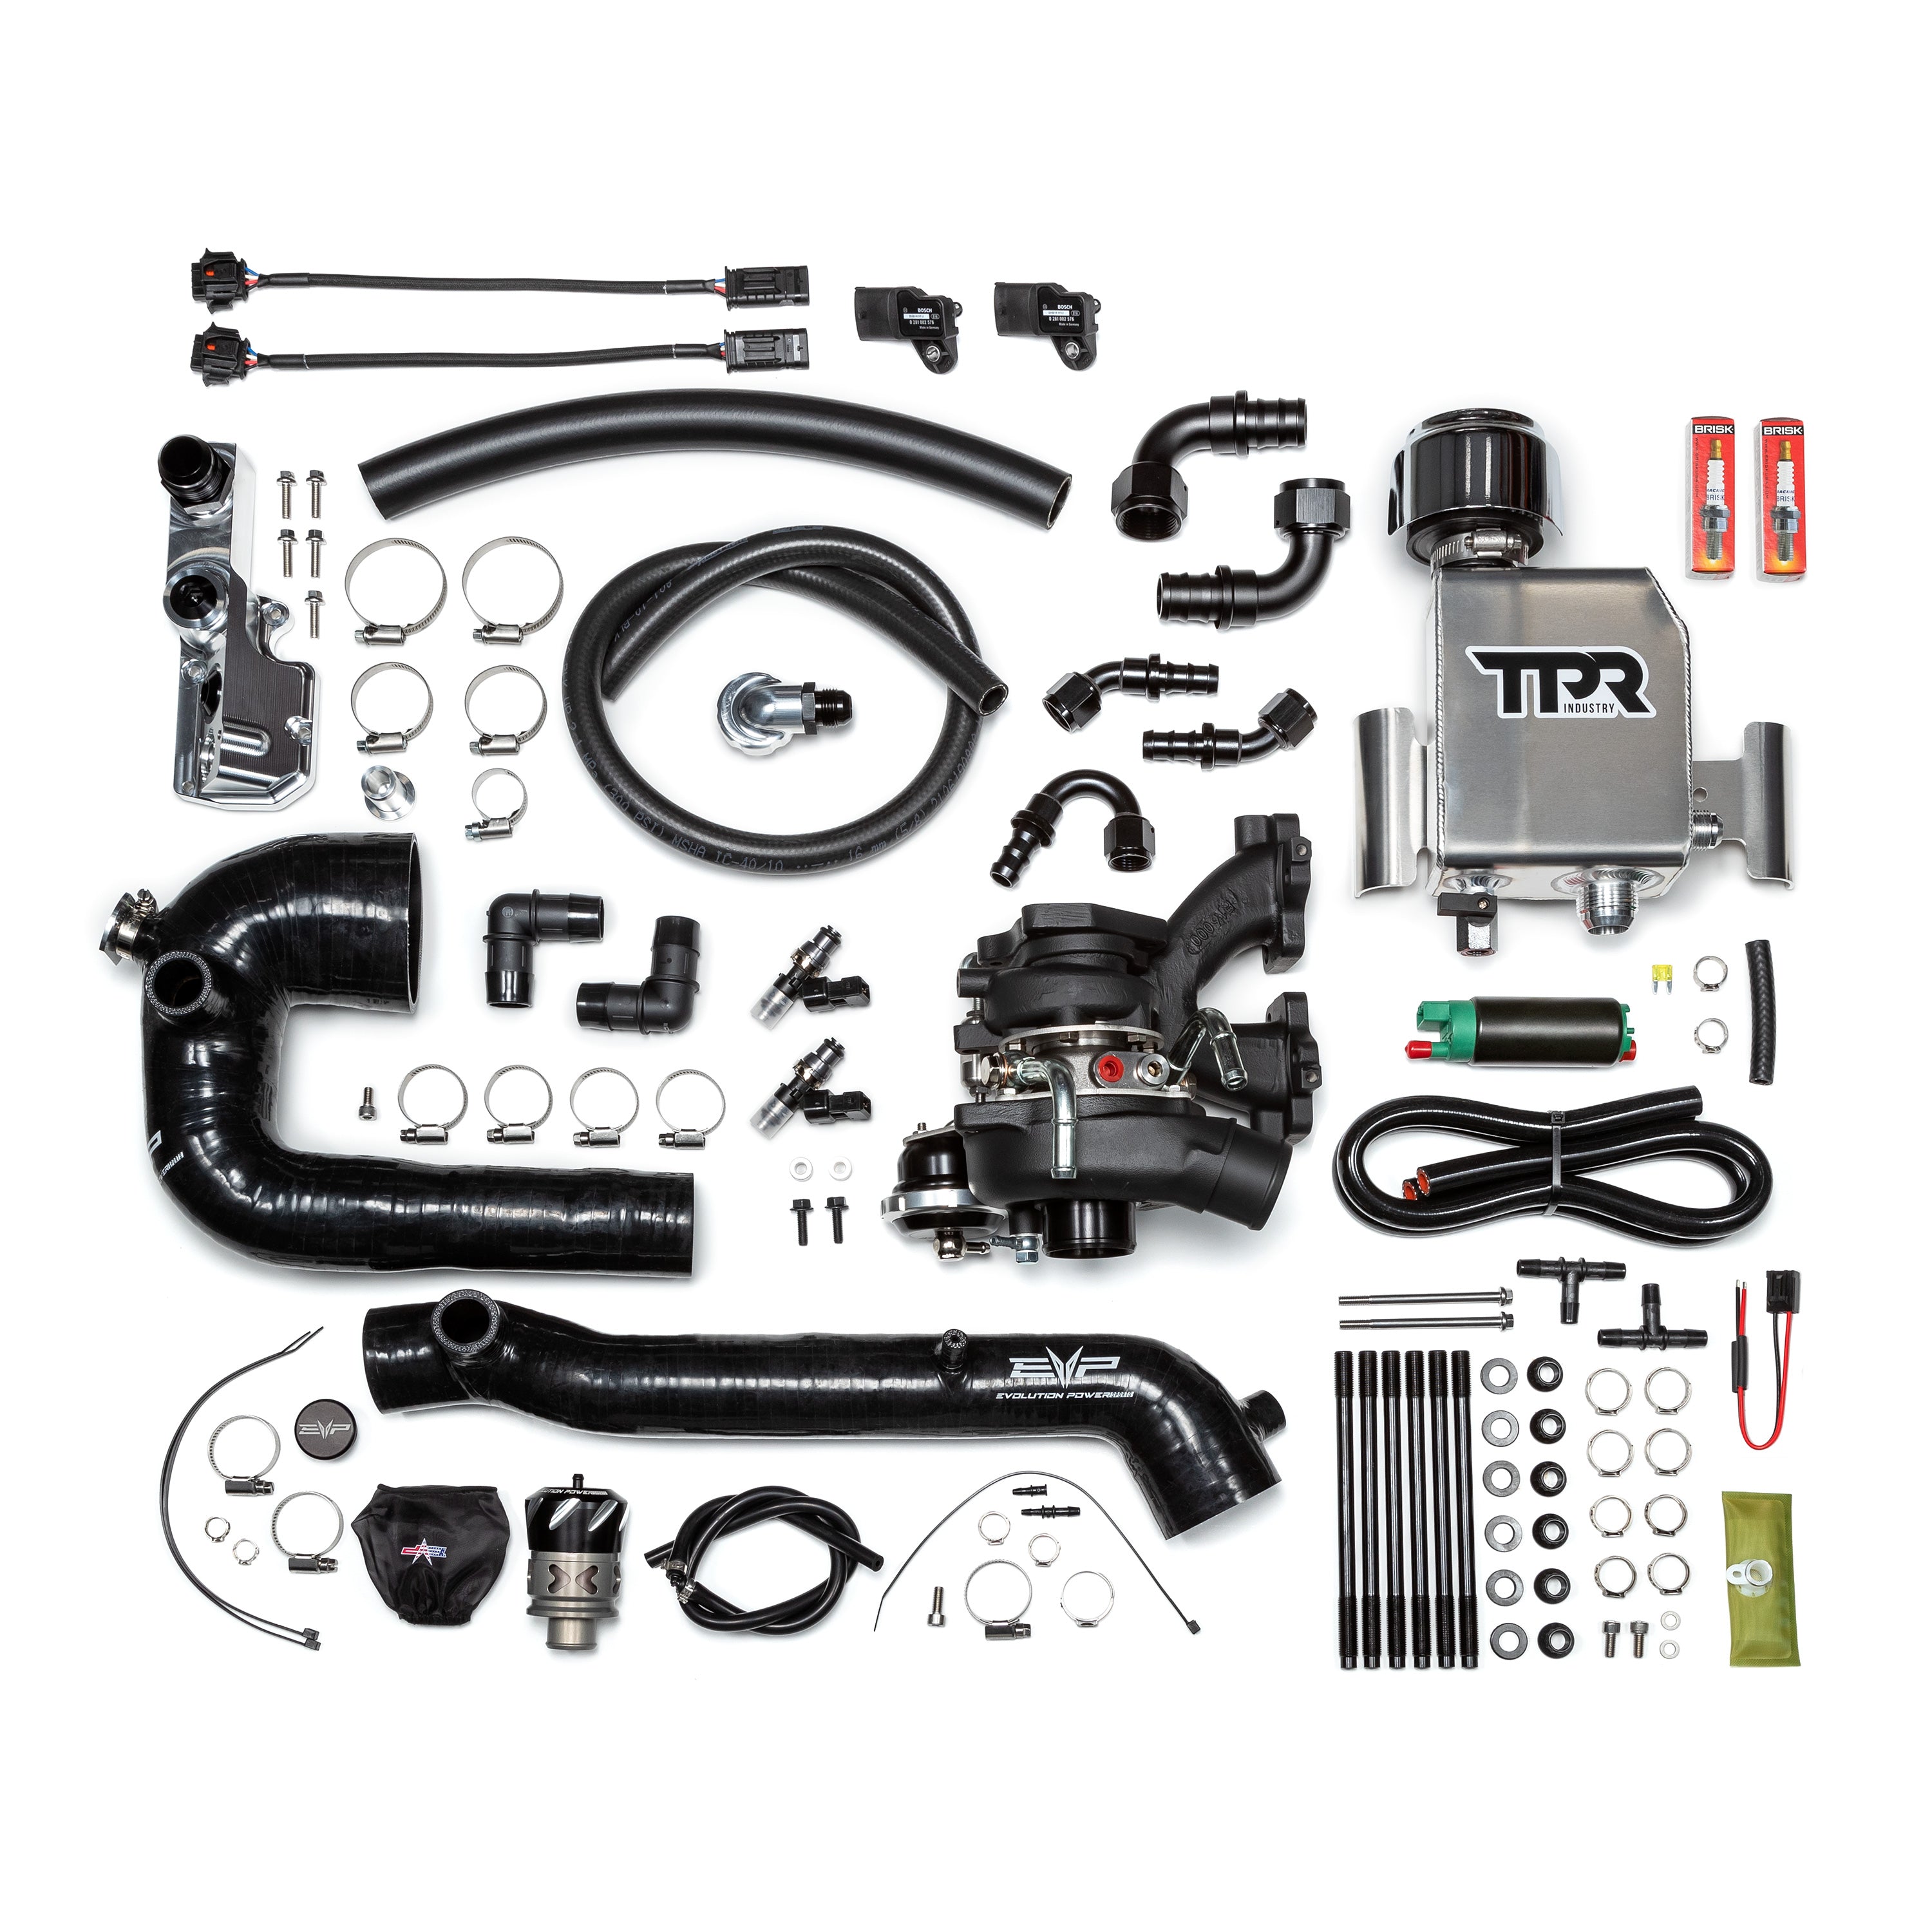 EVP Paragon P43-280 Turbo System for 2019-'21 Polaris RZR XP Turbo/S With Fuel Pump Control Module